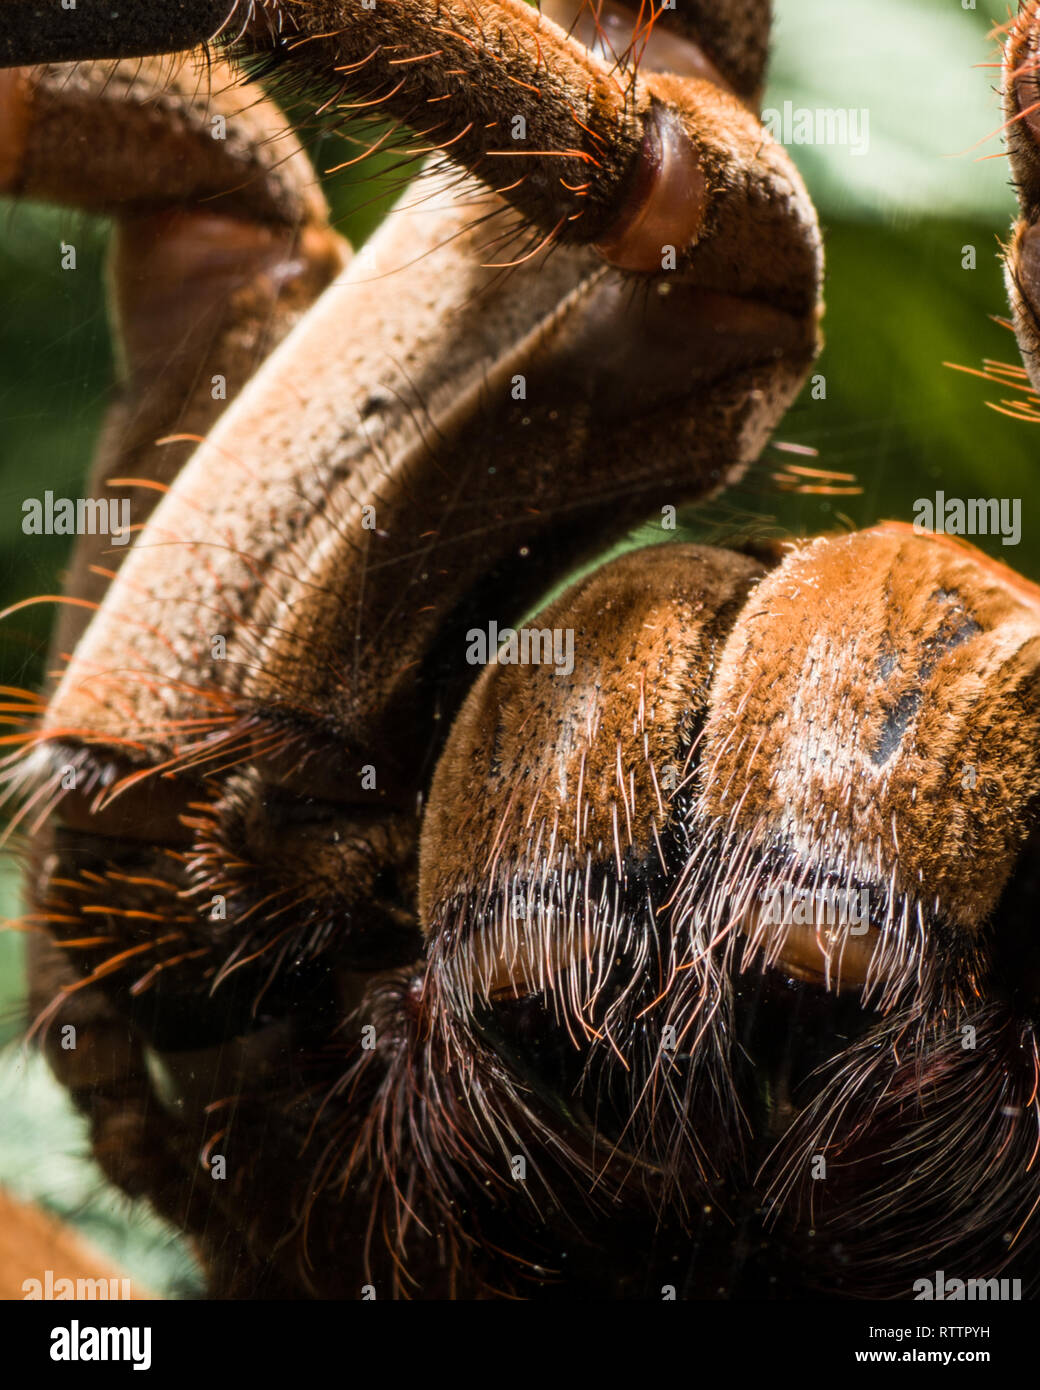 Spider exhibit at the Royal Botanical Gardens, 2019-02-24, as a Goliath birdeater tarantula (Theraphosa blondi) shows itself. Stock Photo